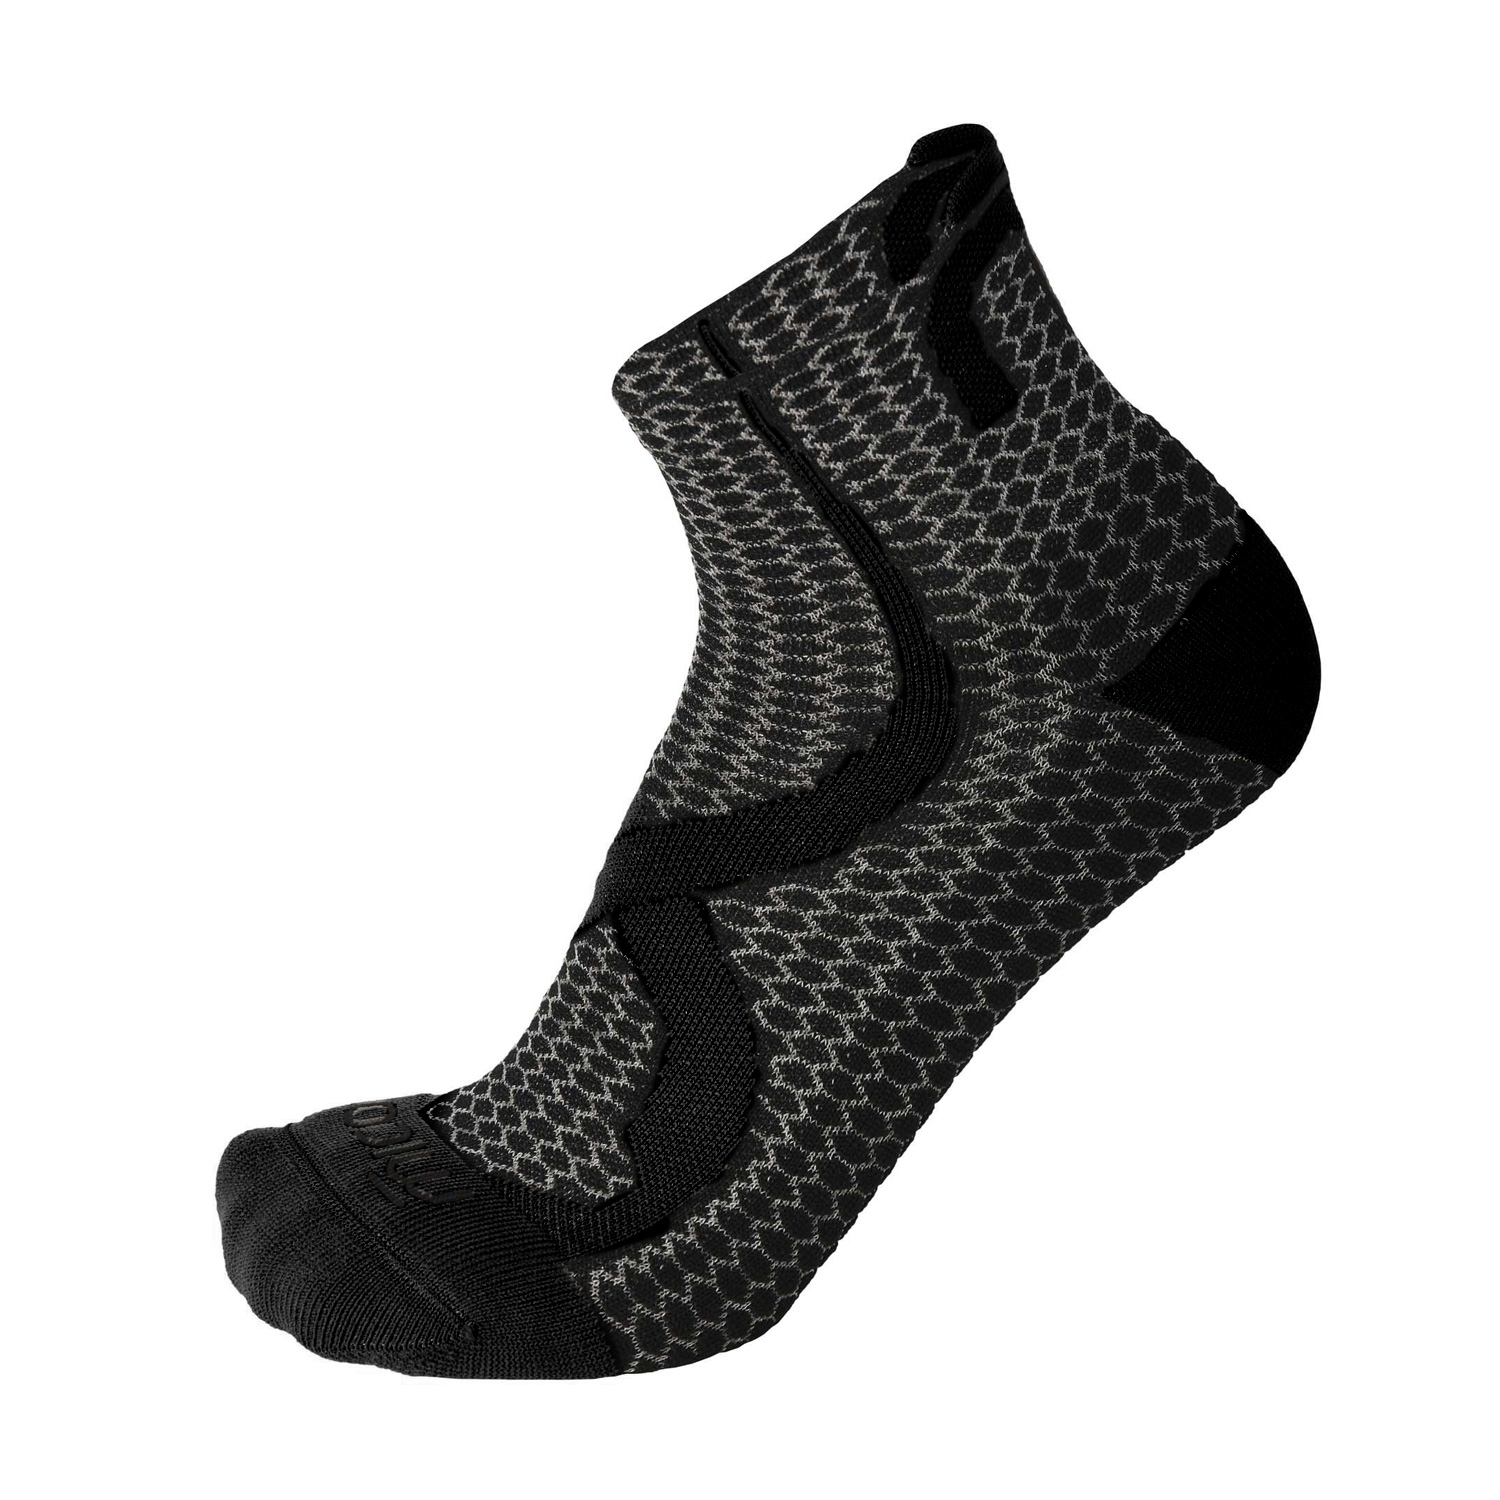 Mico Odor Zero Light Weight Socks - Grigio